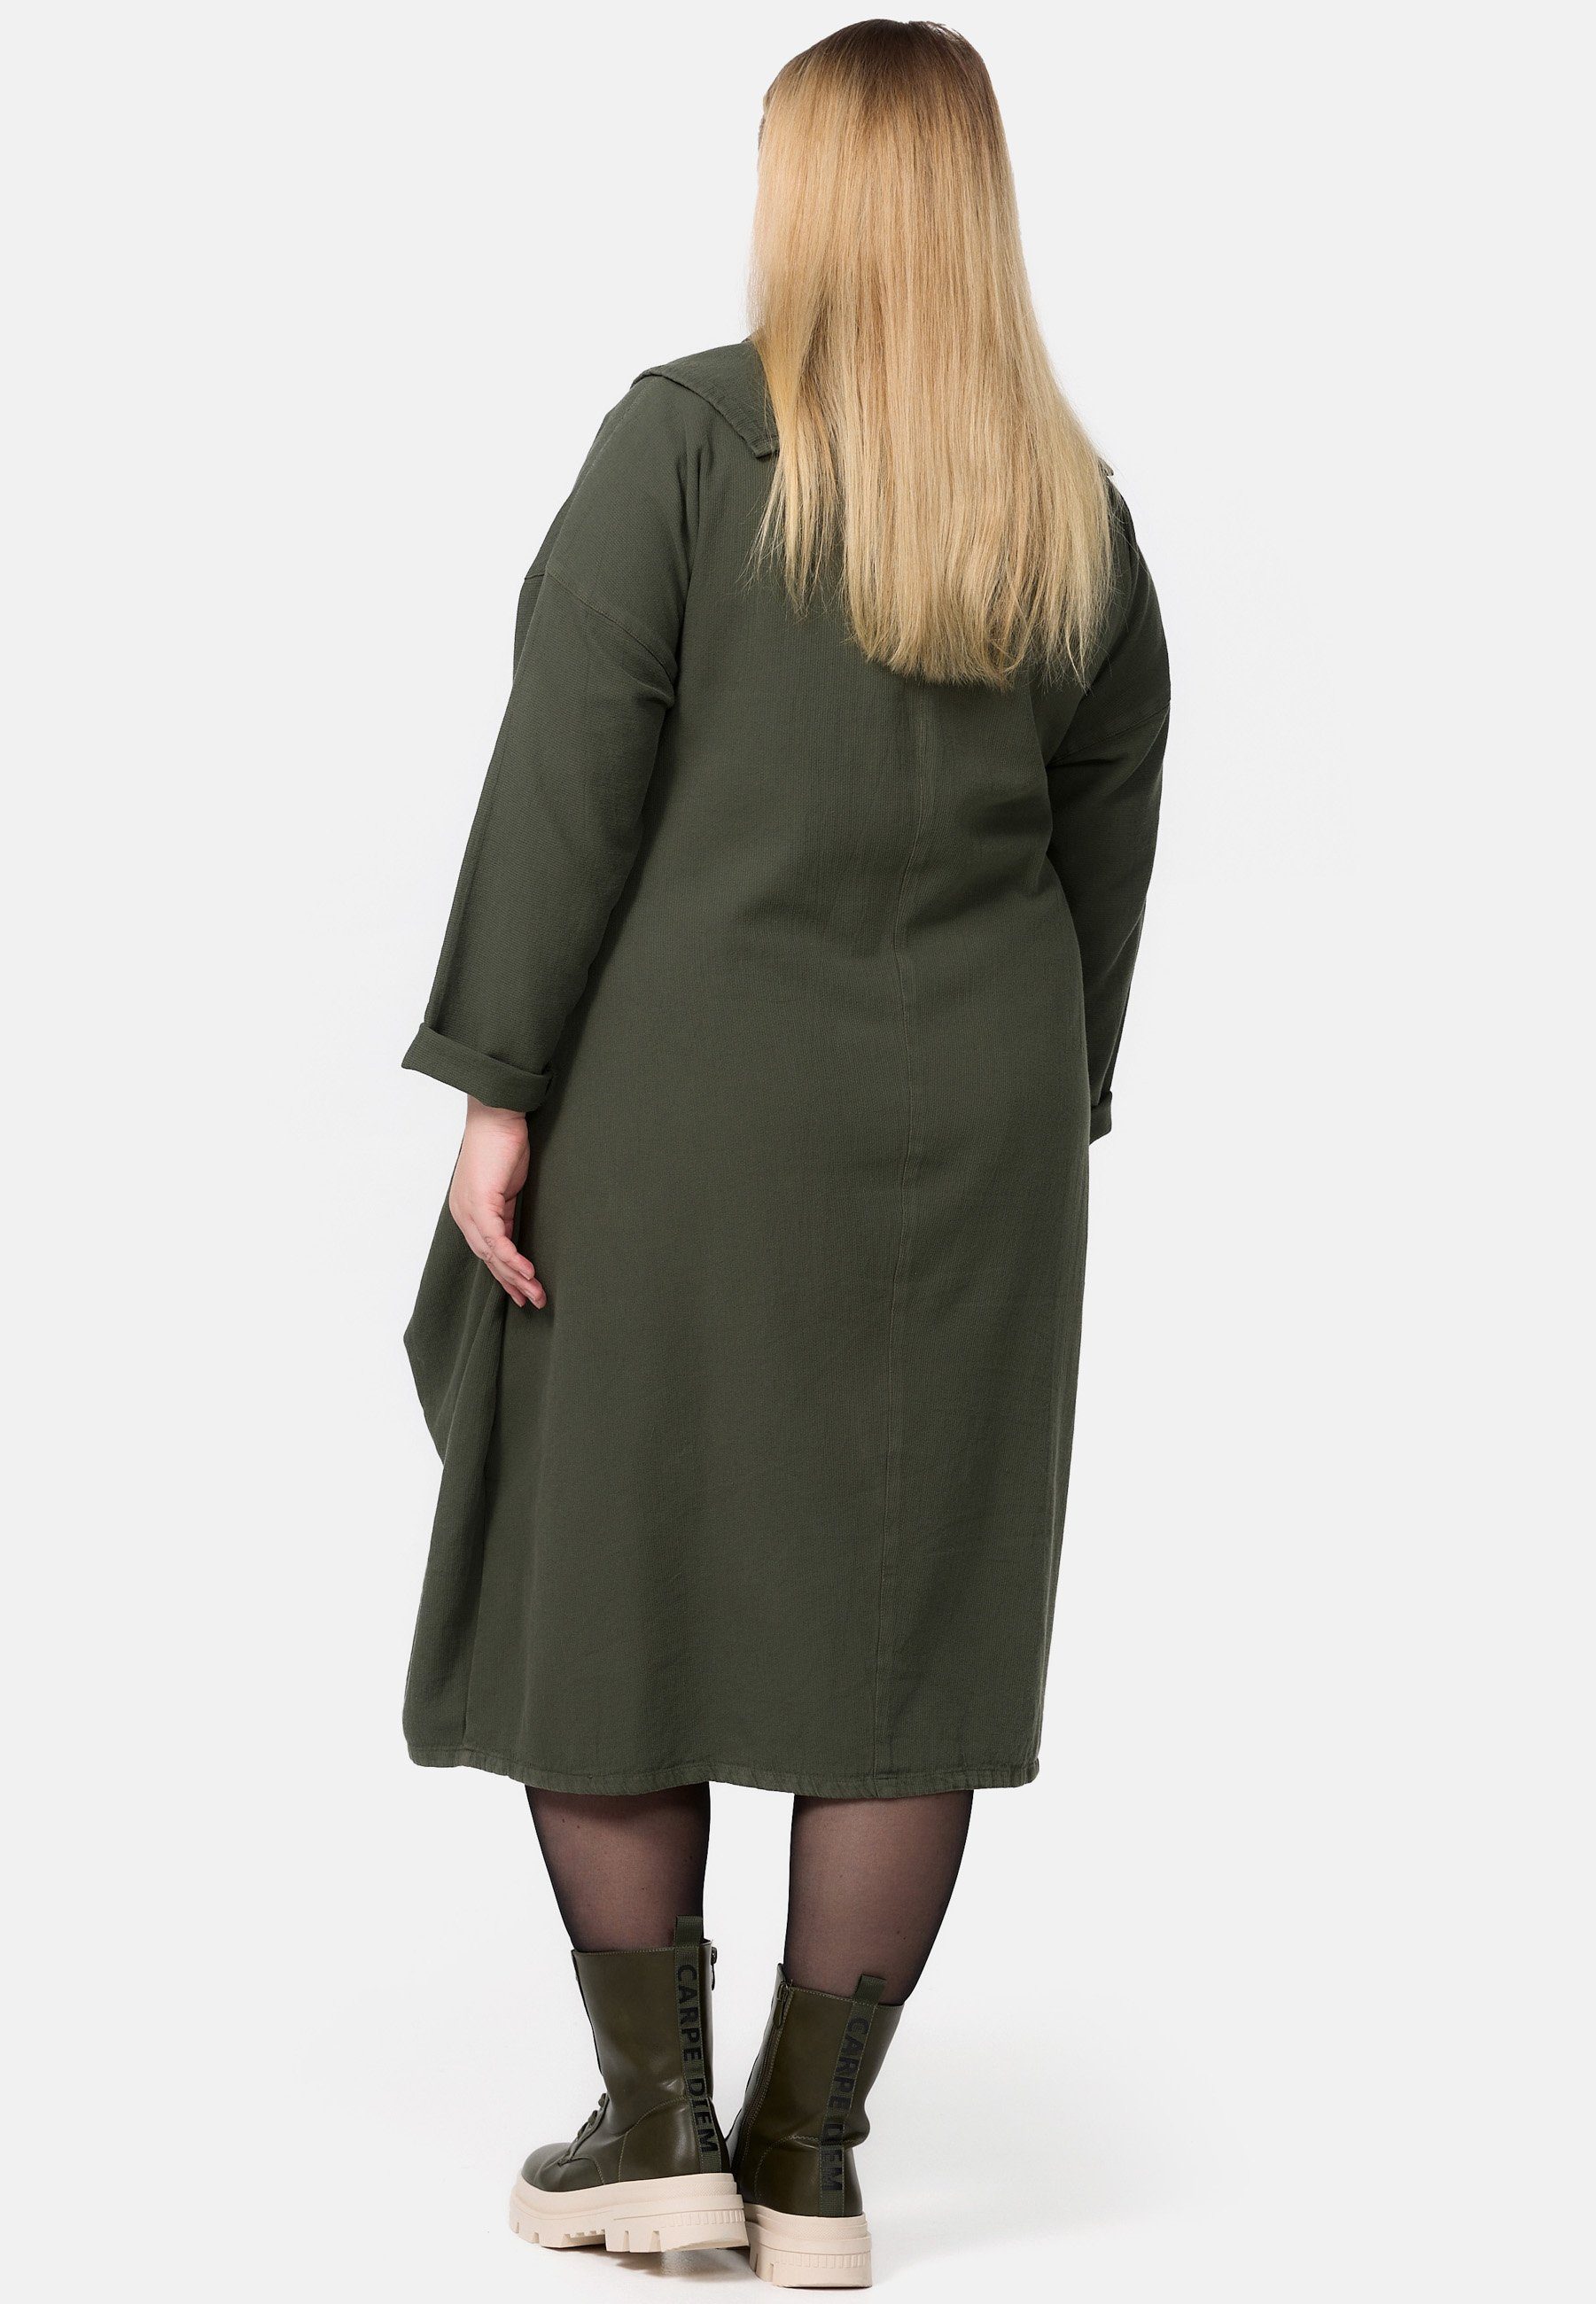 Kekoo A-Linien-Kleid Cord-Kleid in aus 100% A-Linie 'Sienna' Khaki Baumwolle